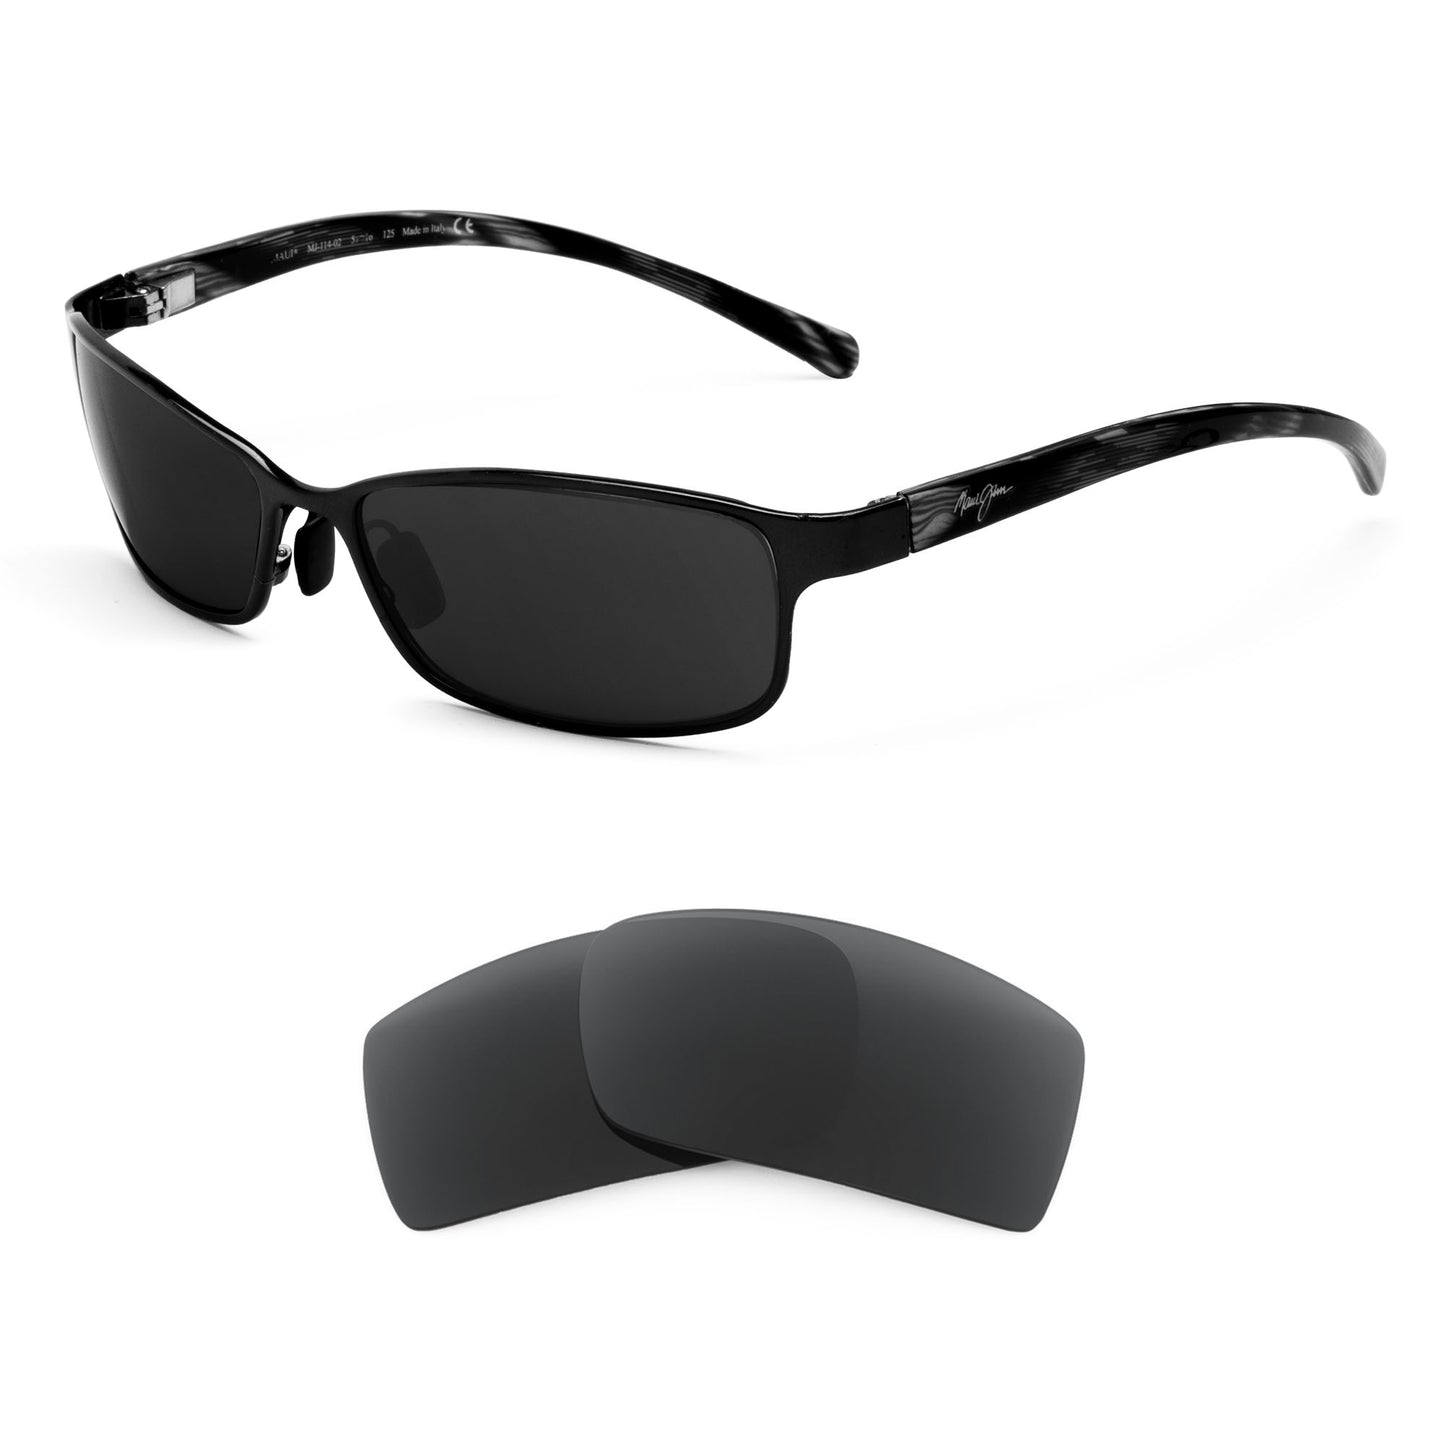 Maui Jim Shoreline MJ114 sunglasses with replacement lenses